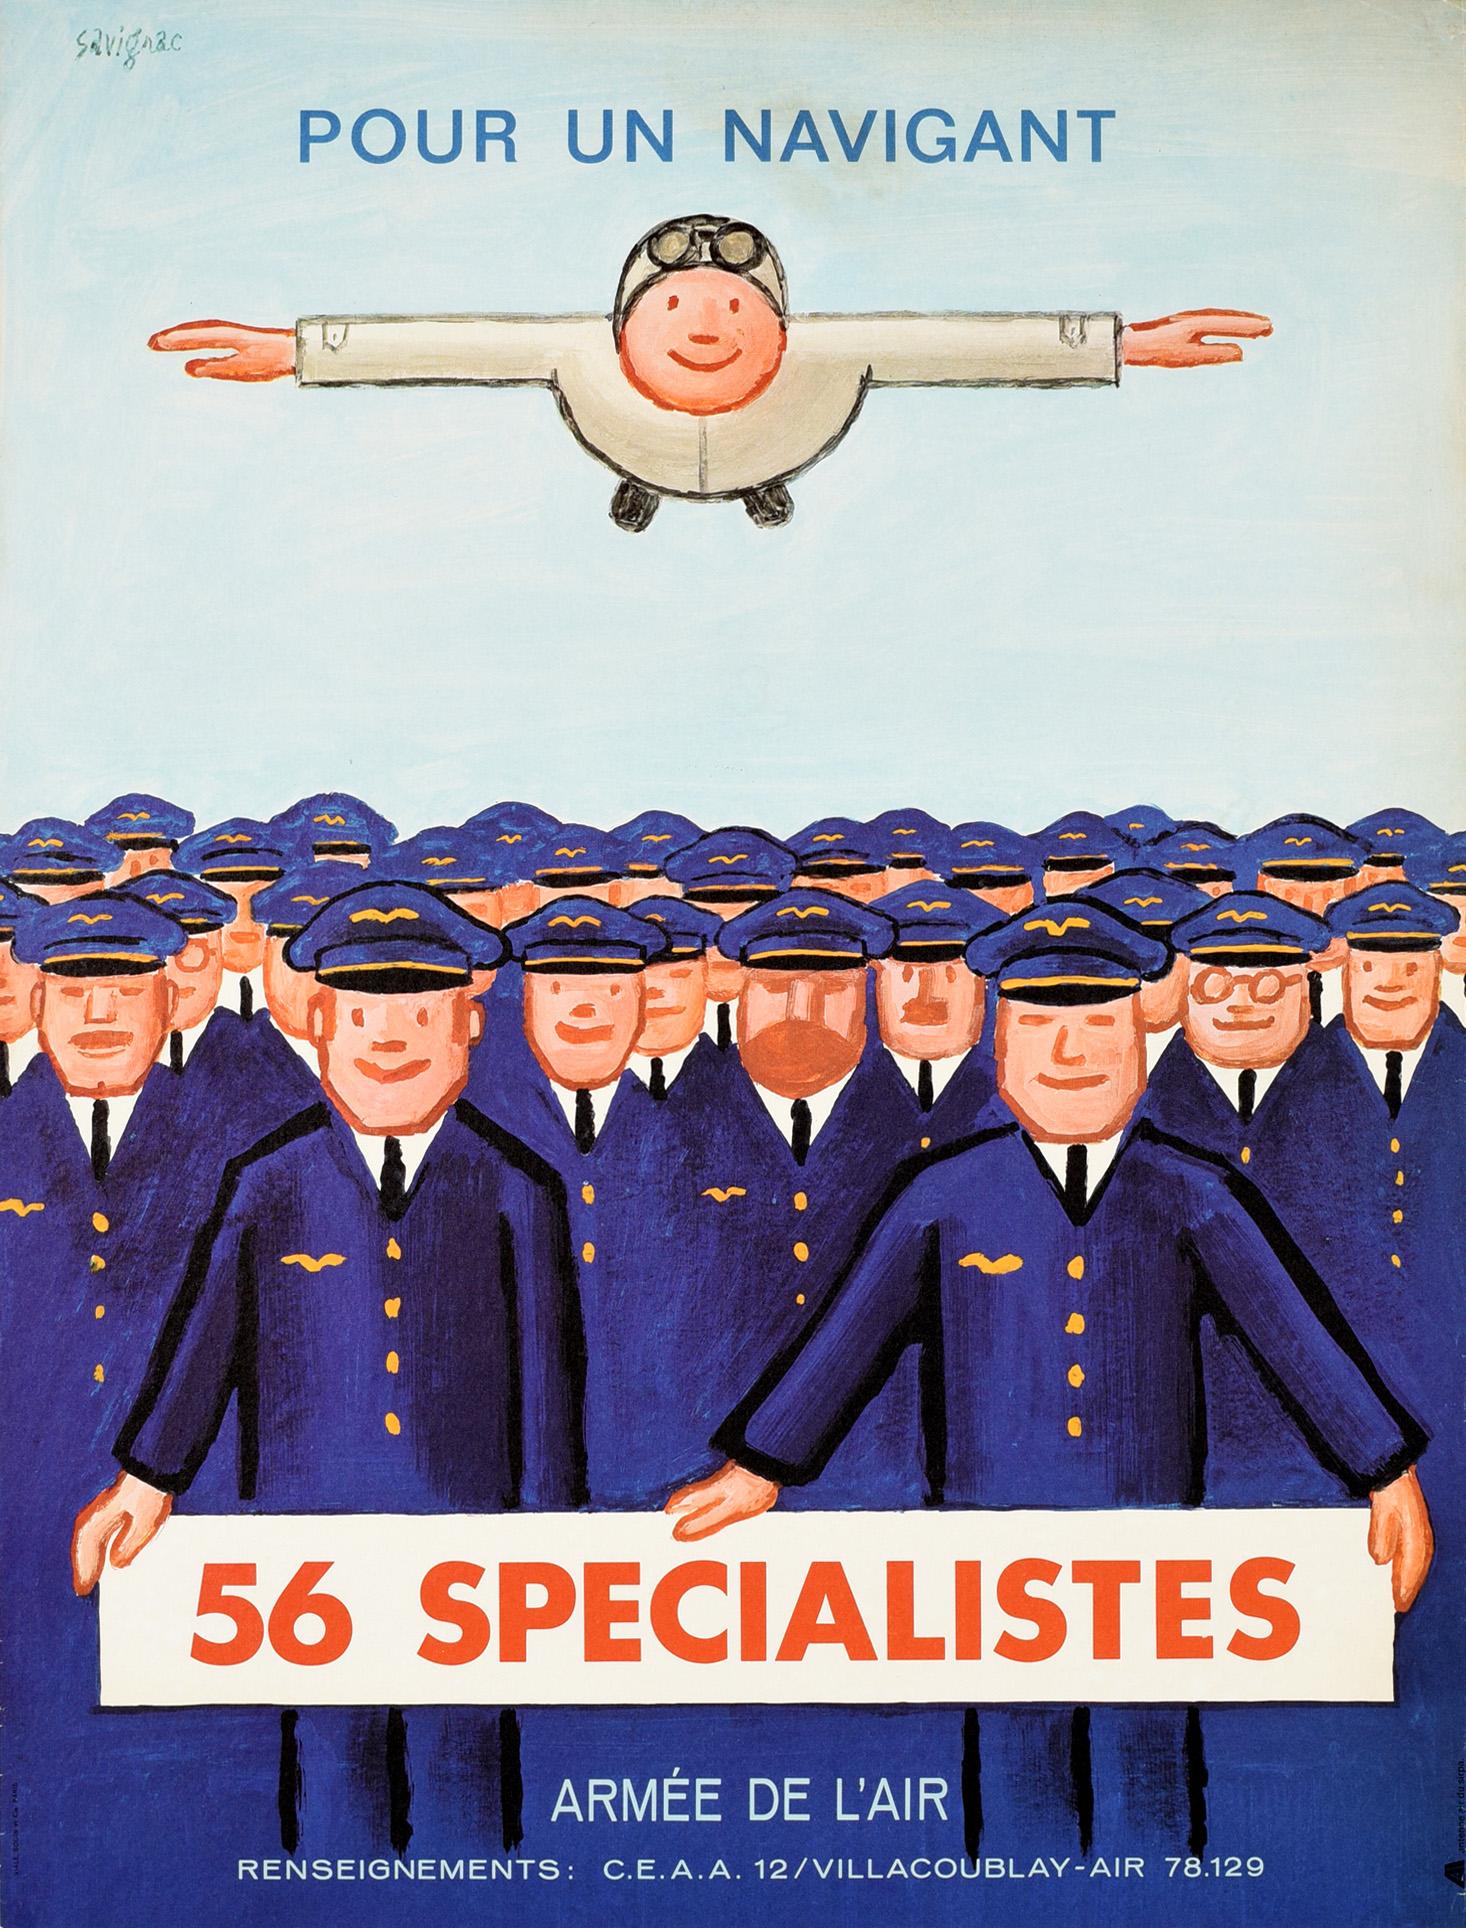 Raymond Savignac Print - Original Vintage Poster Air Force Pilot Recruitment Armee De l'Air Flying Design